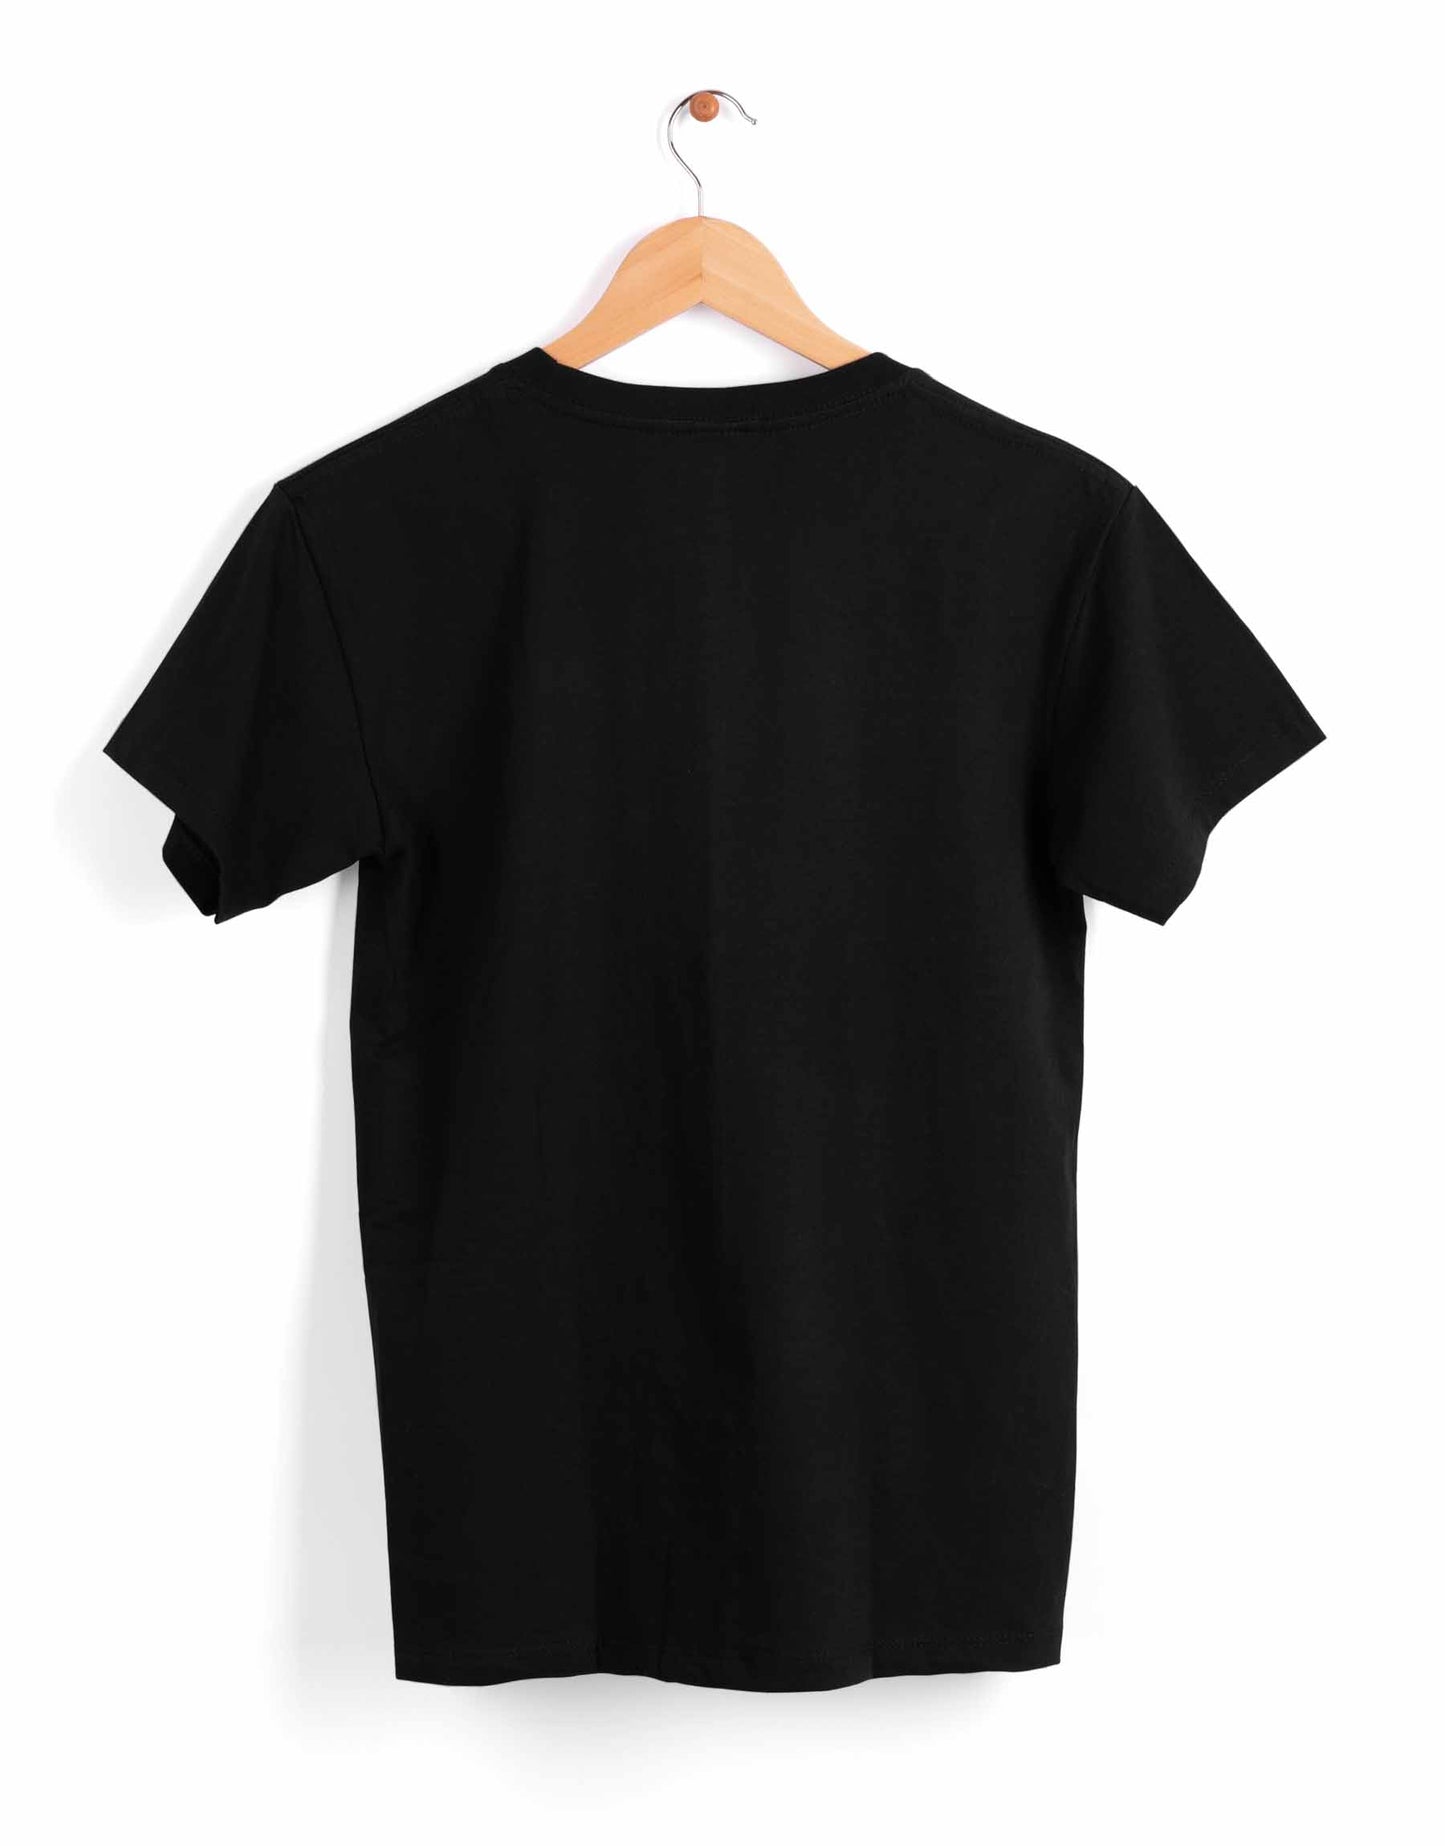 Sherlock Stylish T-Shirt - 100% Cotton | TEEGURUJI - 499.00 - TEEGURUJI - Free Shipping